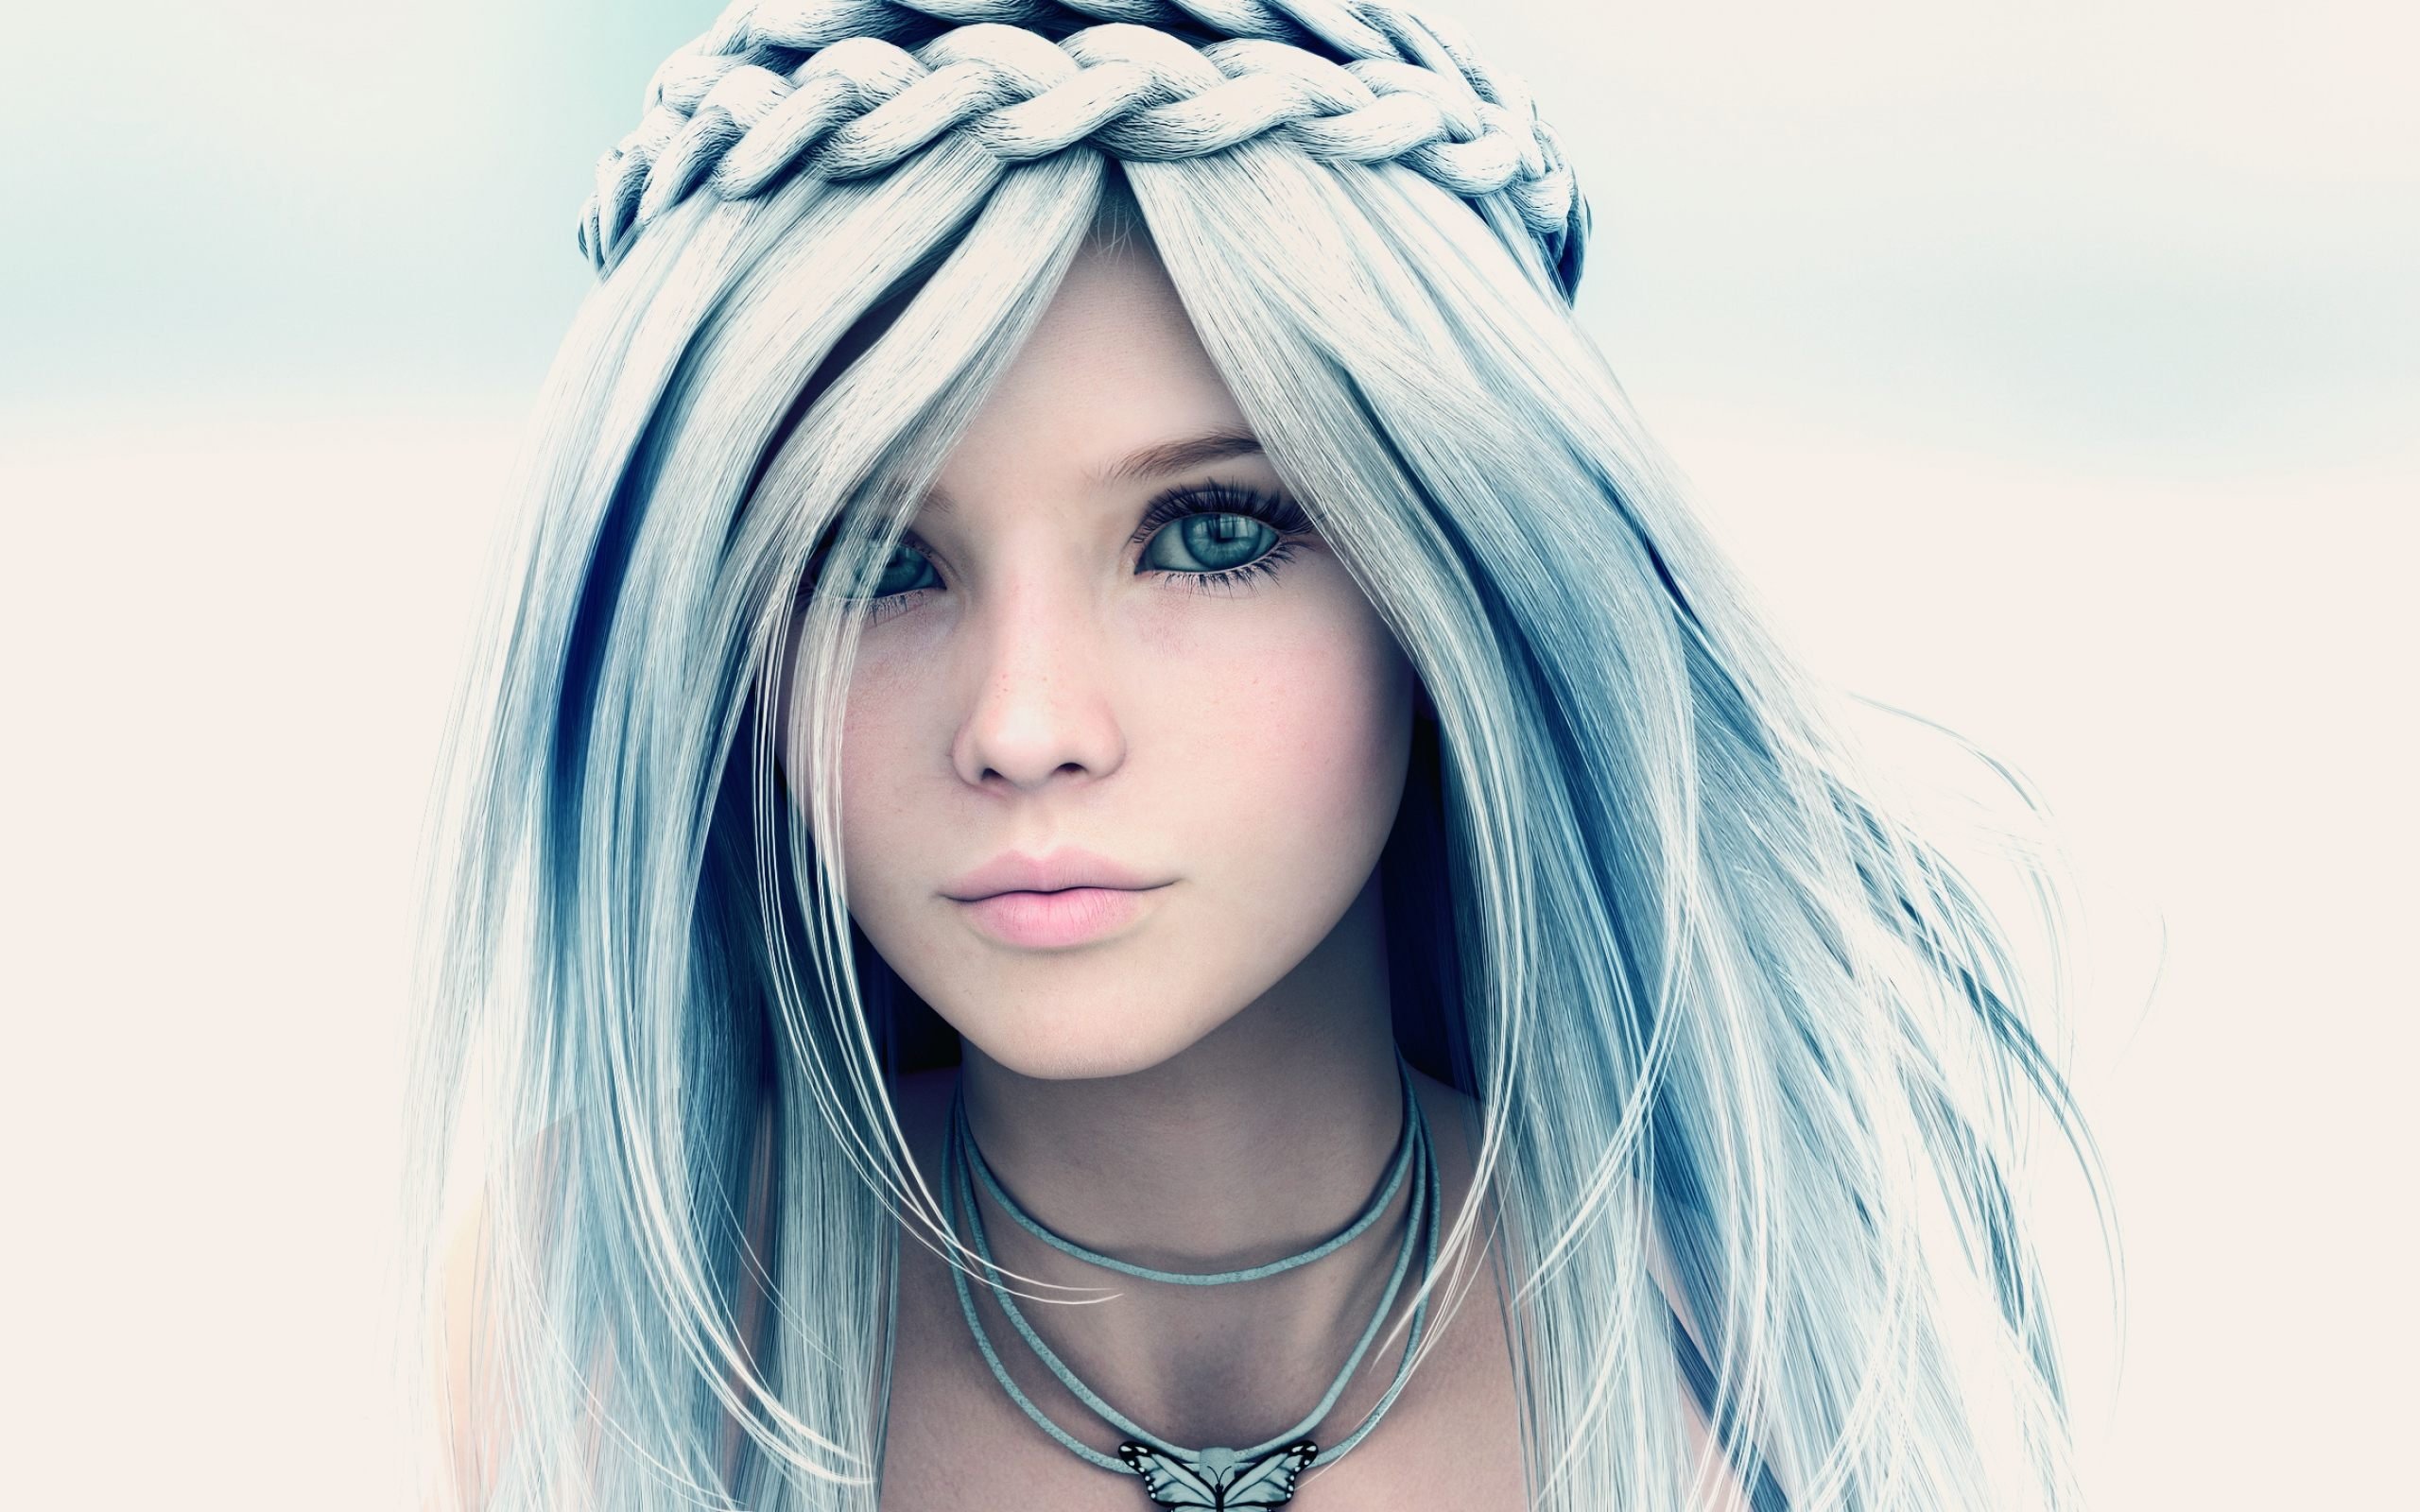 Blue Hair Girl Digital Art - wide 1